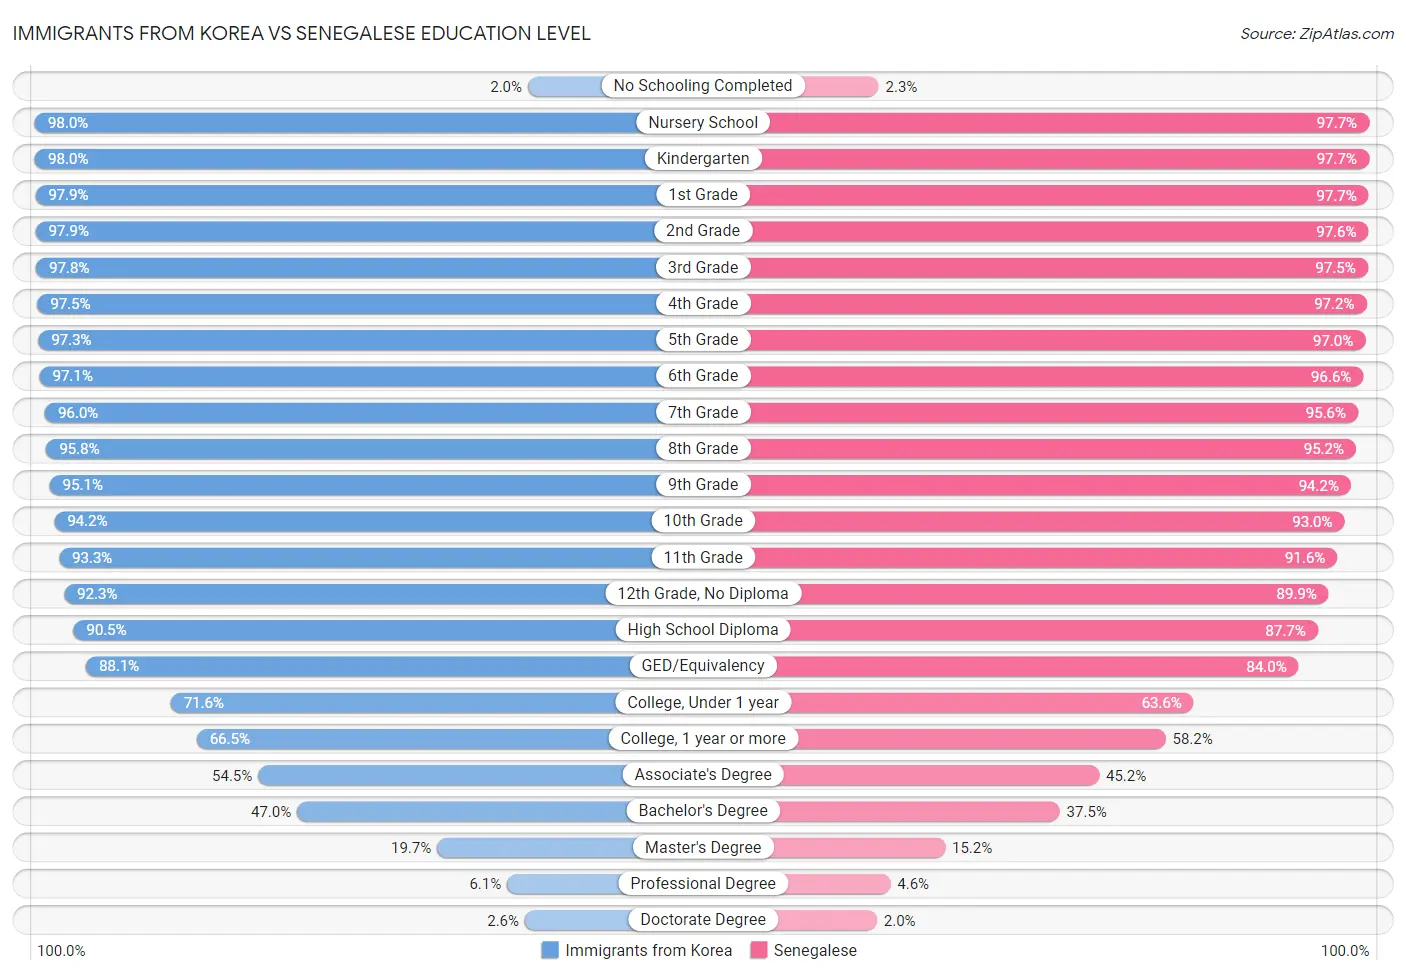 Immigrants from Korea vs Senegalese Education Level